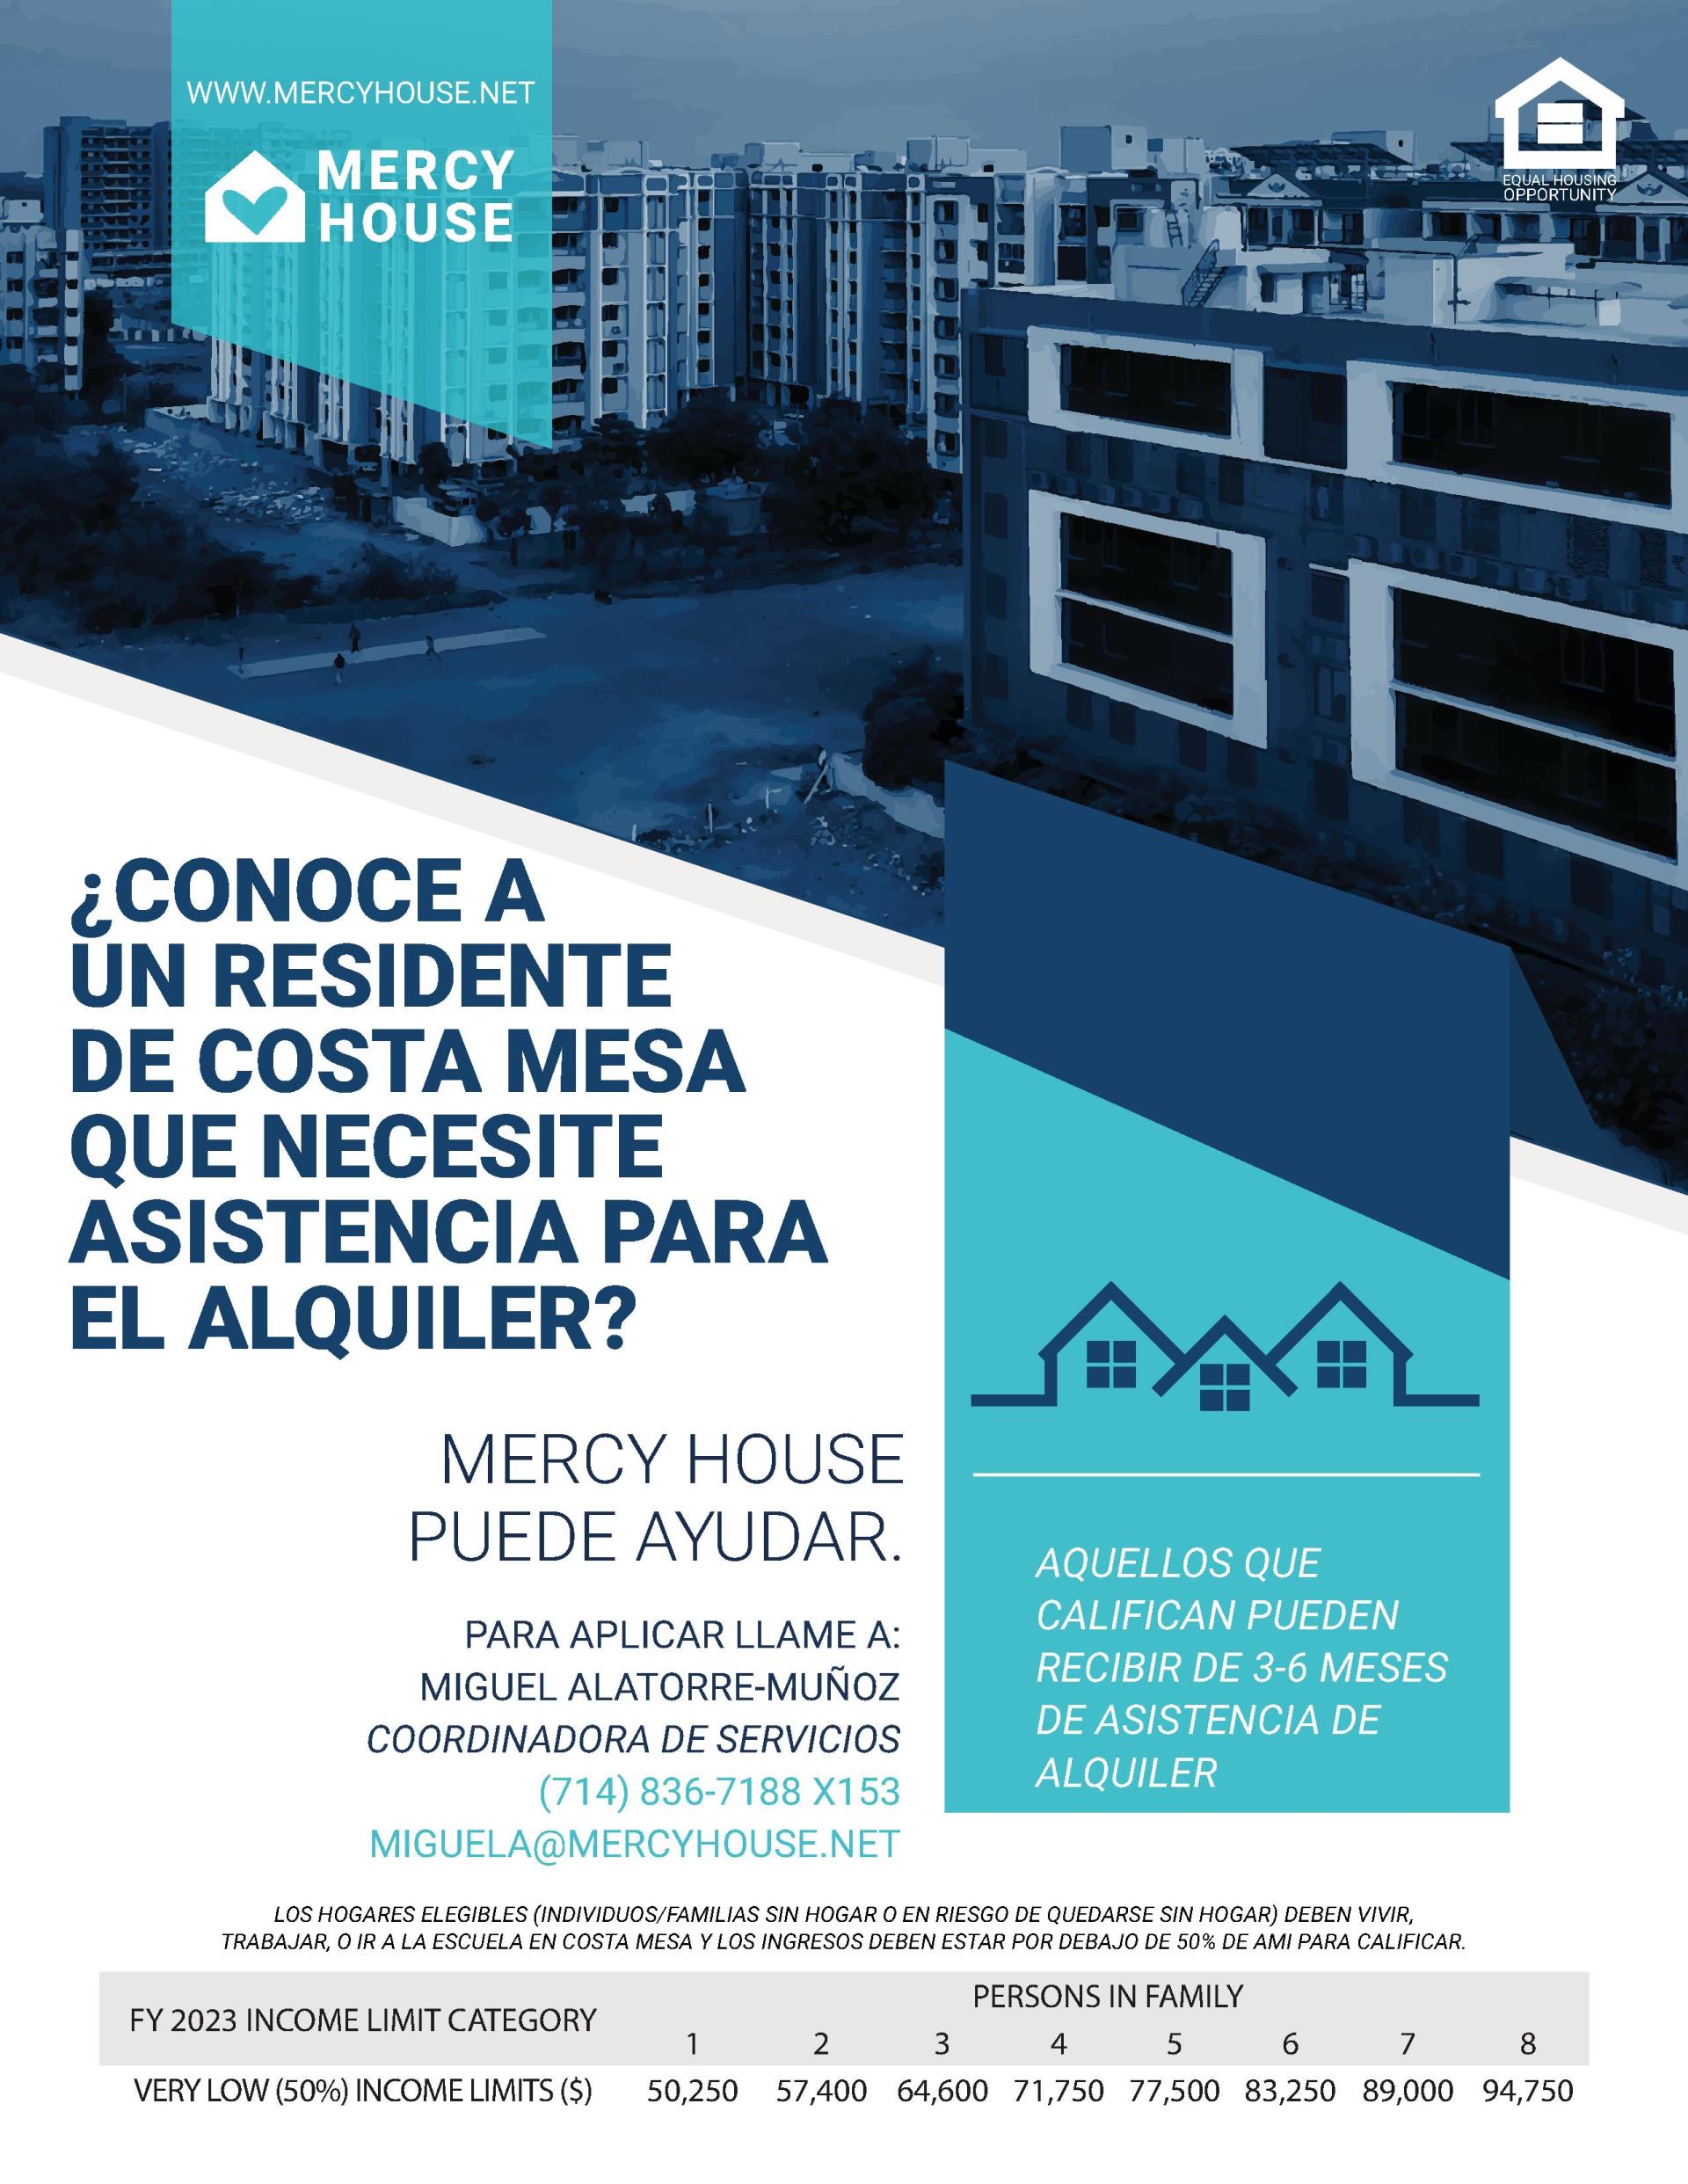 MH Rental Assistance Program - Spanish - CURRENT